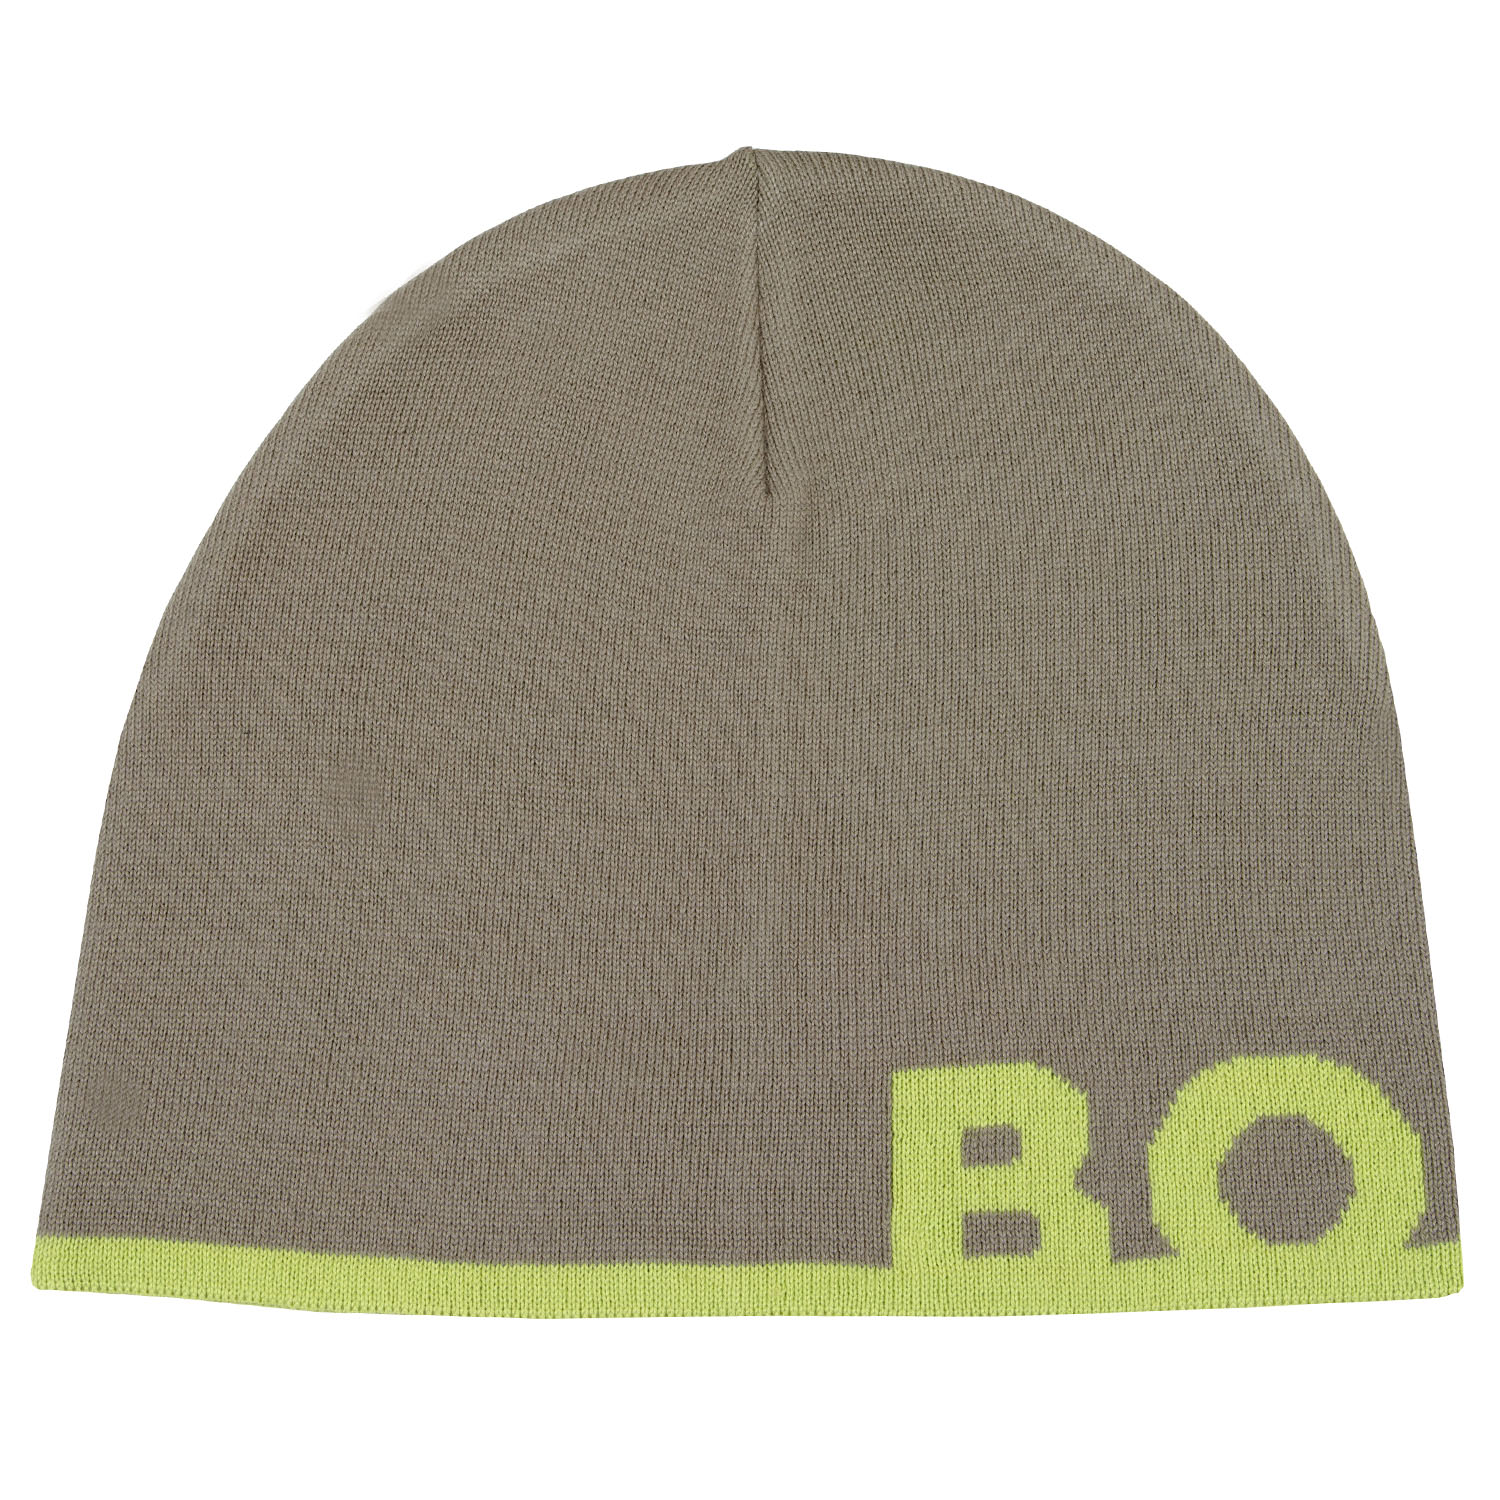 BOSS Acro X Beanie Hat